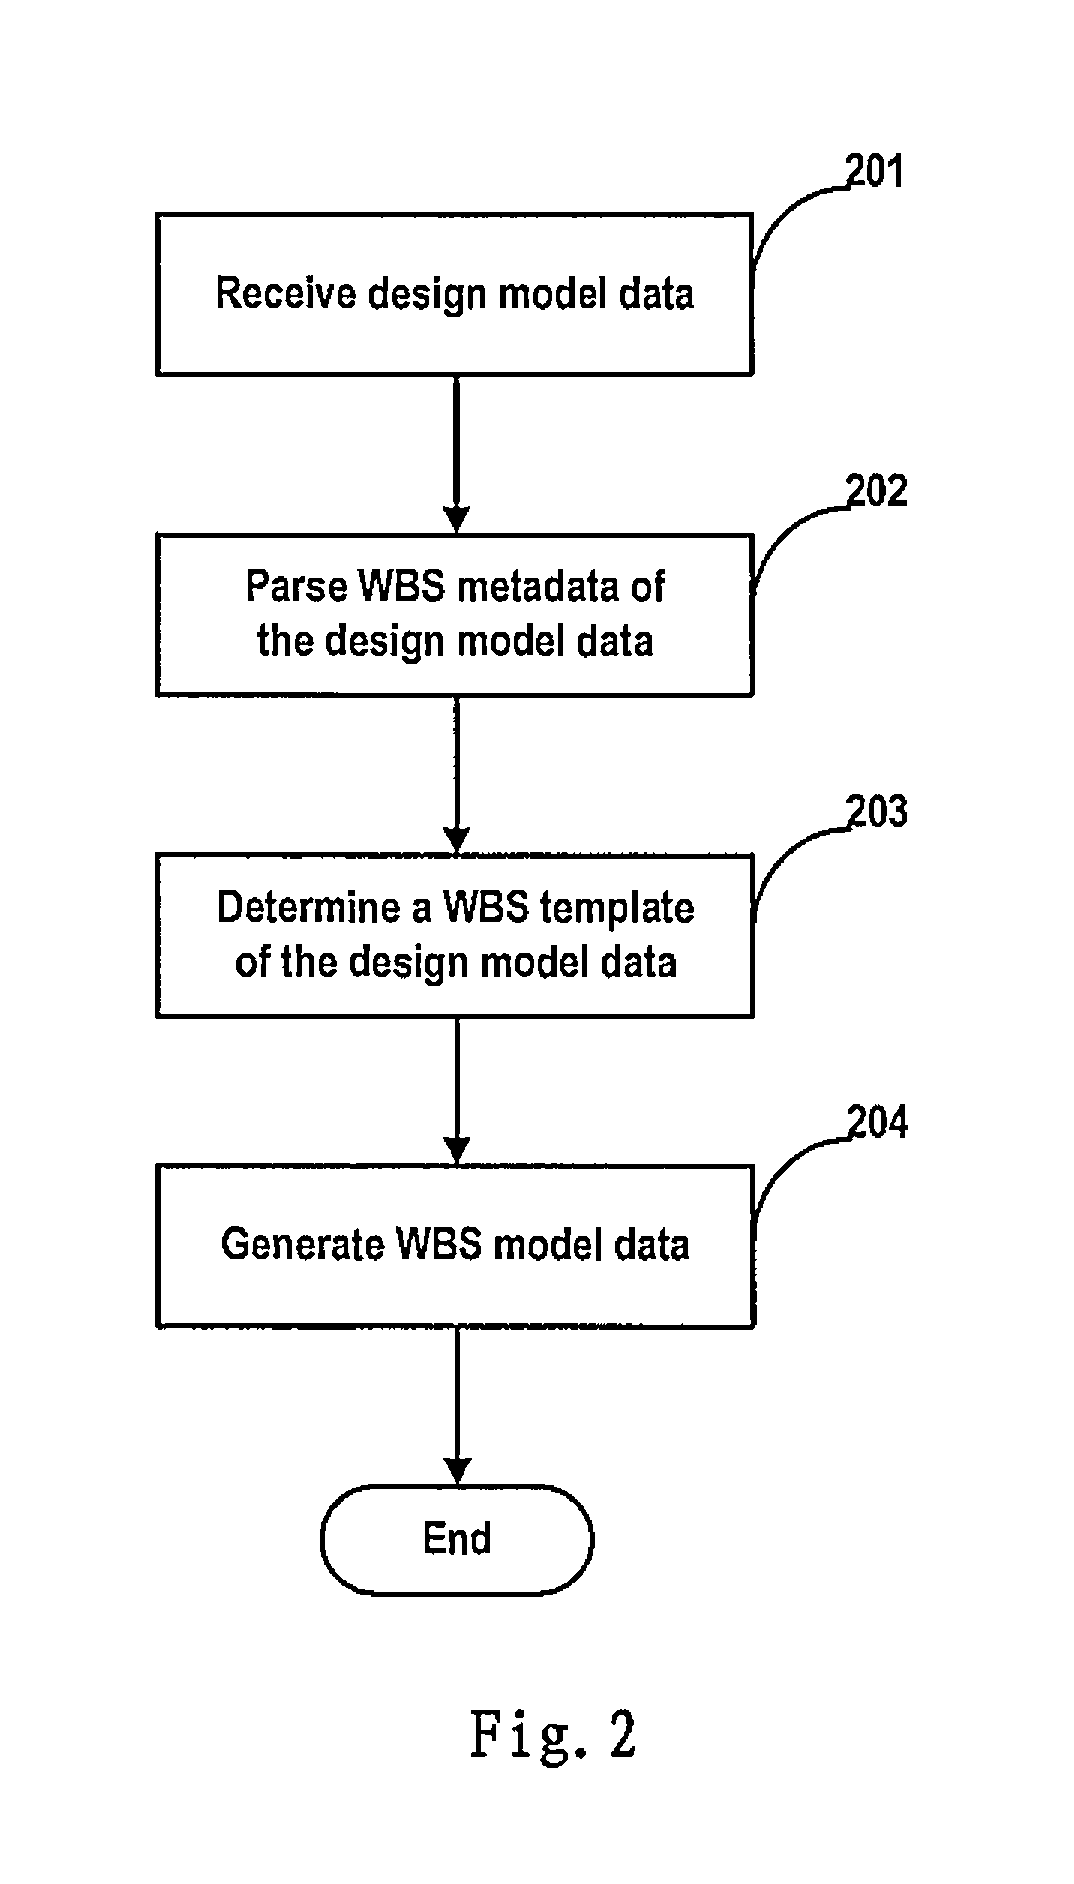 Generation of wbs model data